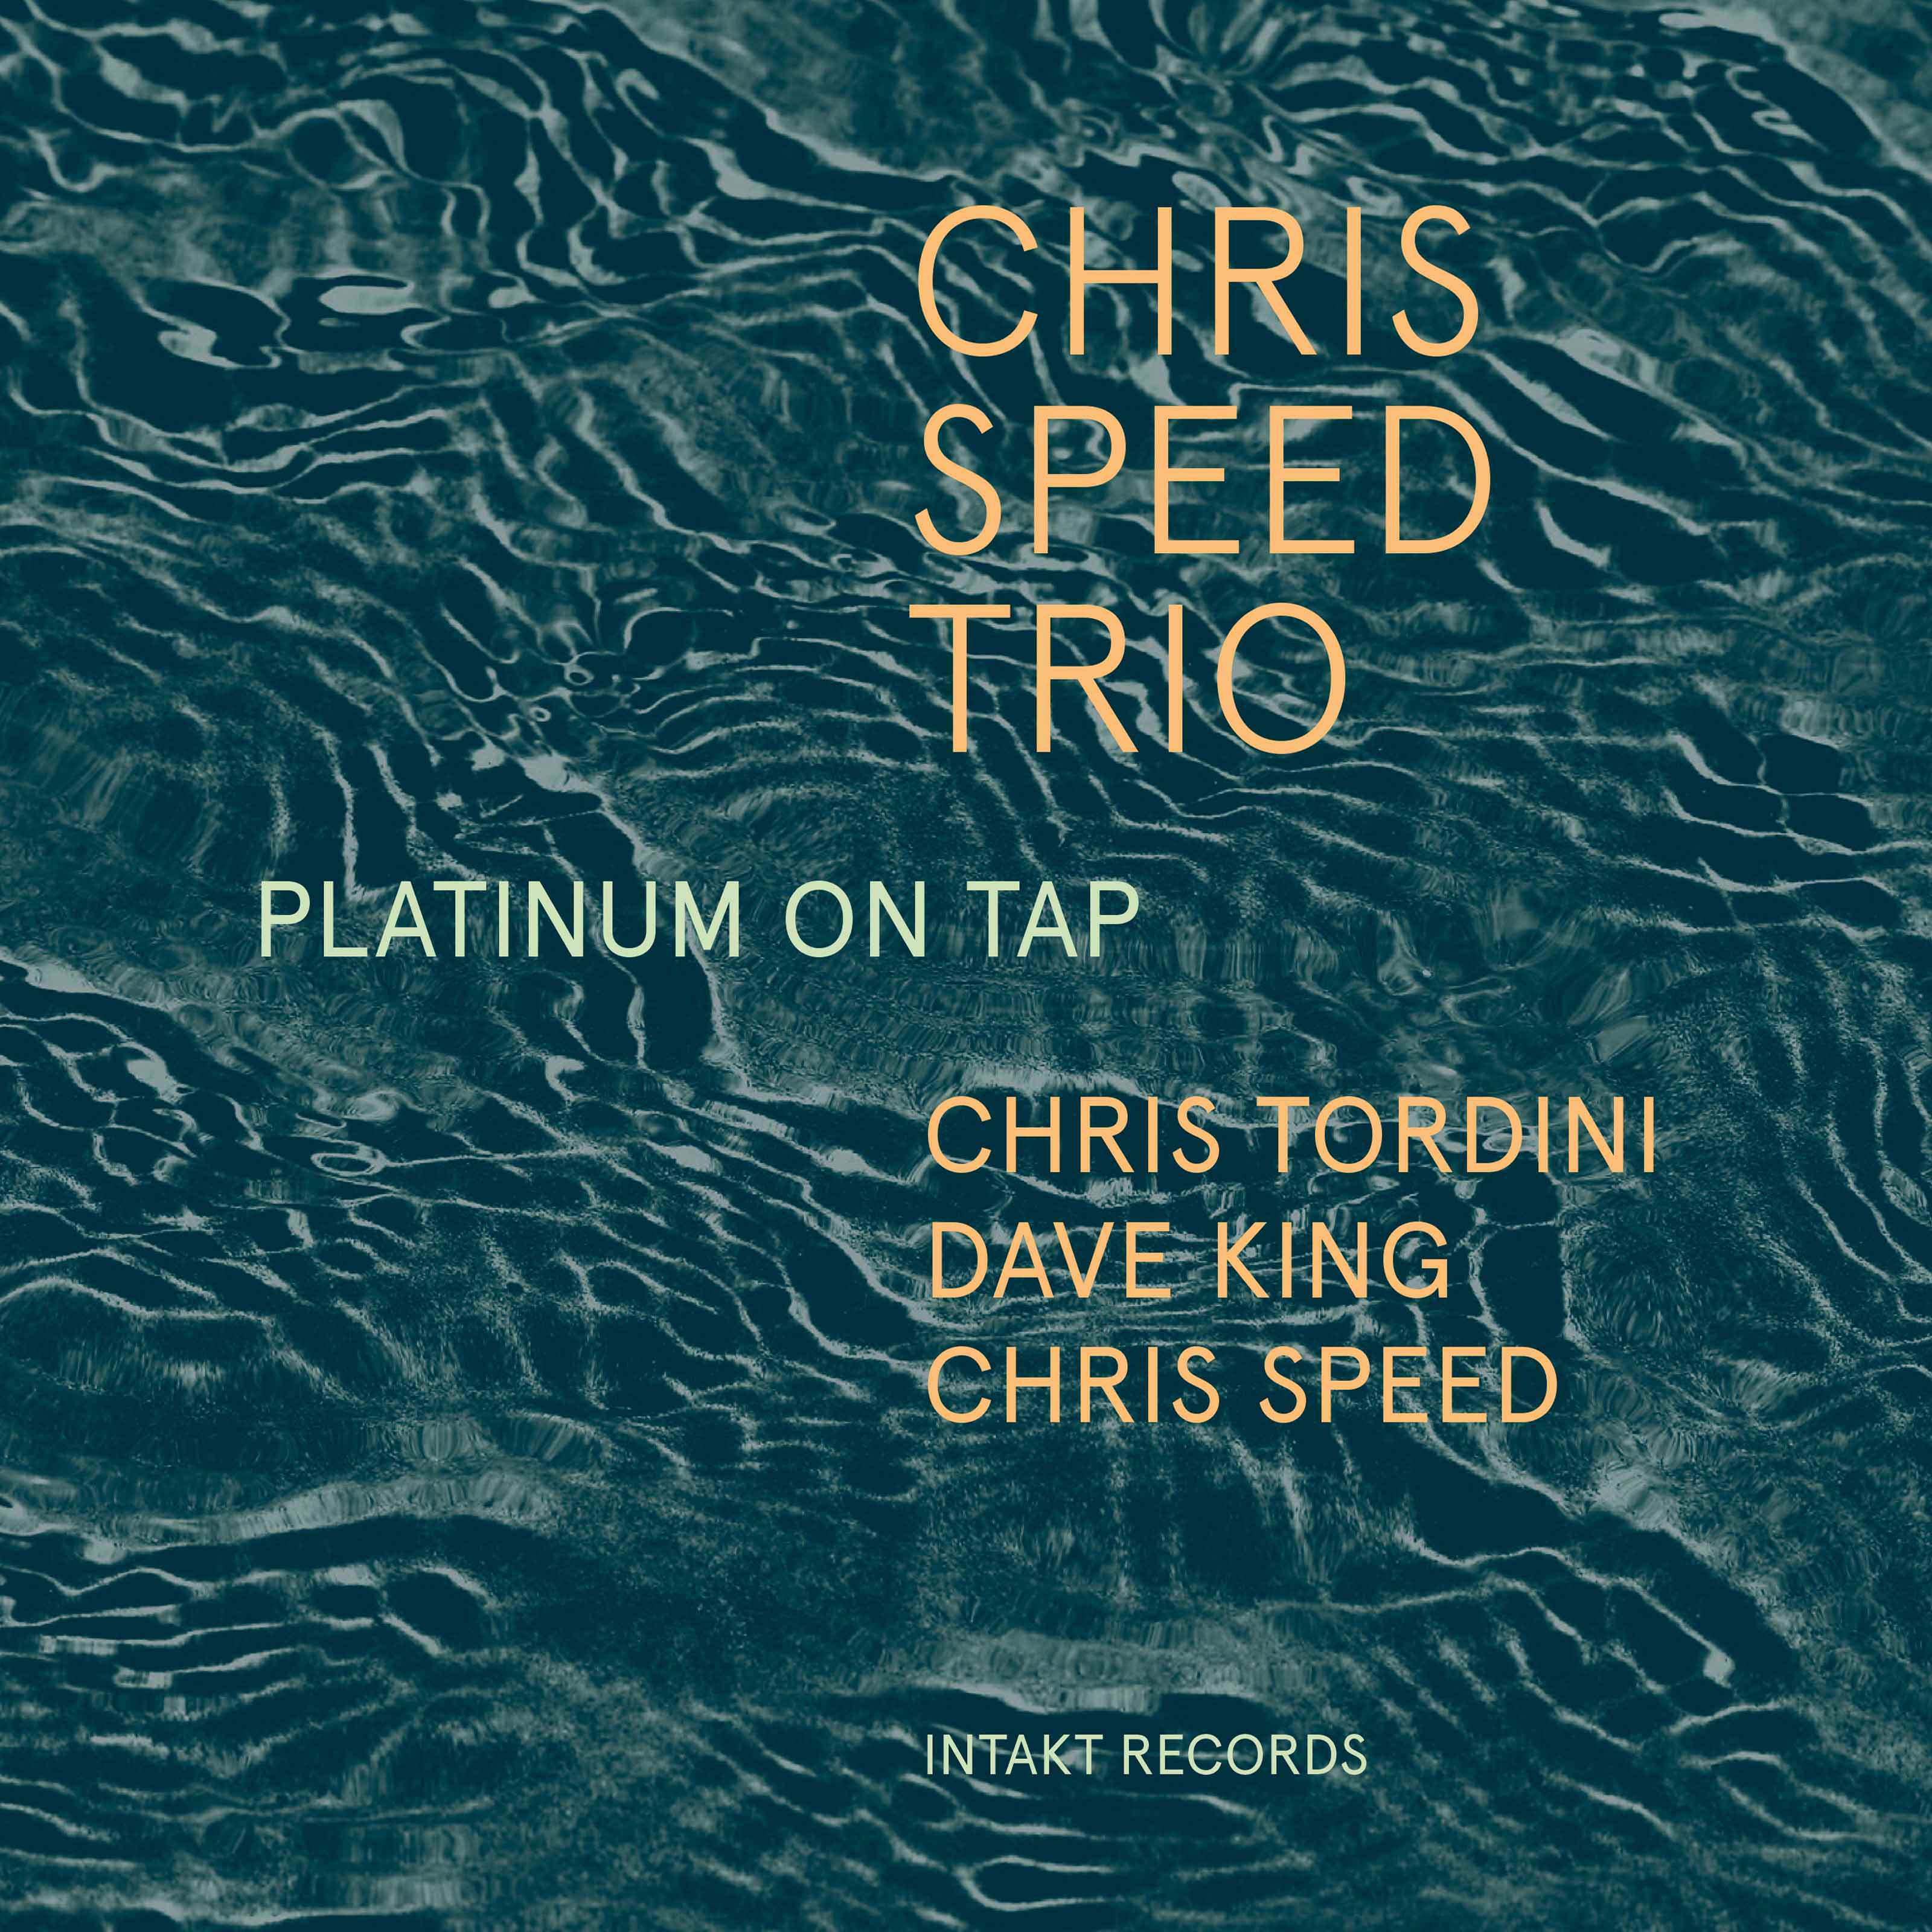 Chris Speed Trio - Platinum On Tap (2017) [HDTracks FLAC 24bit/96kHz]